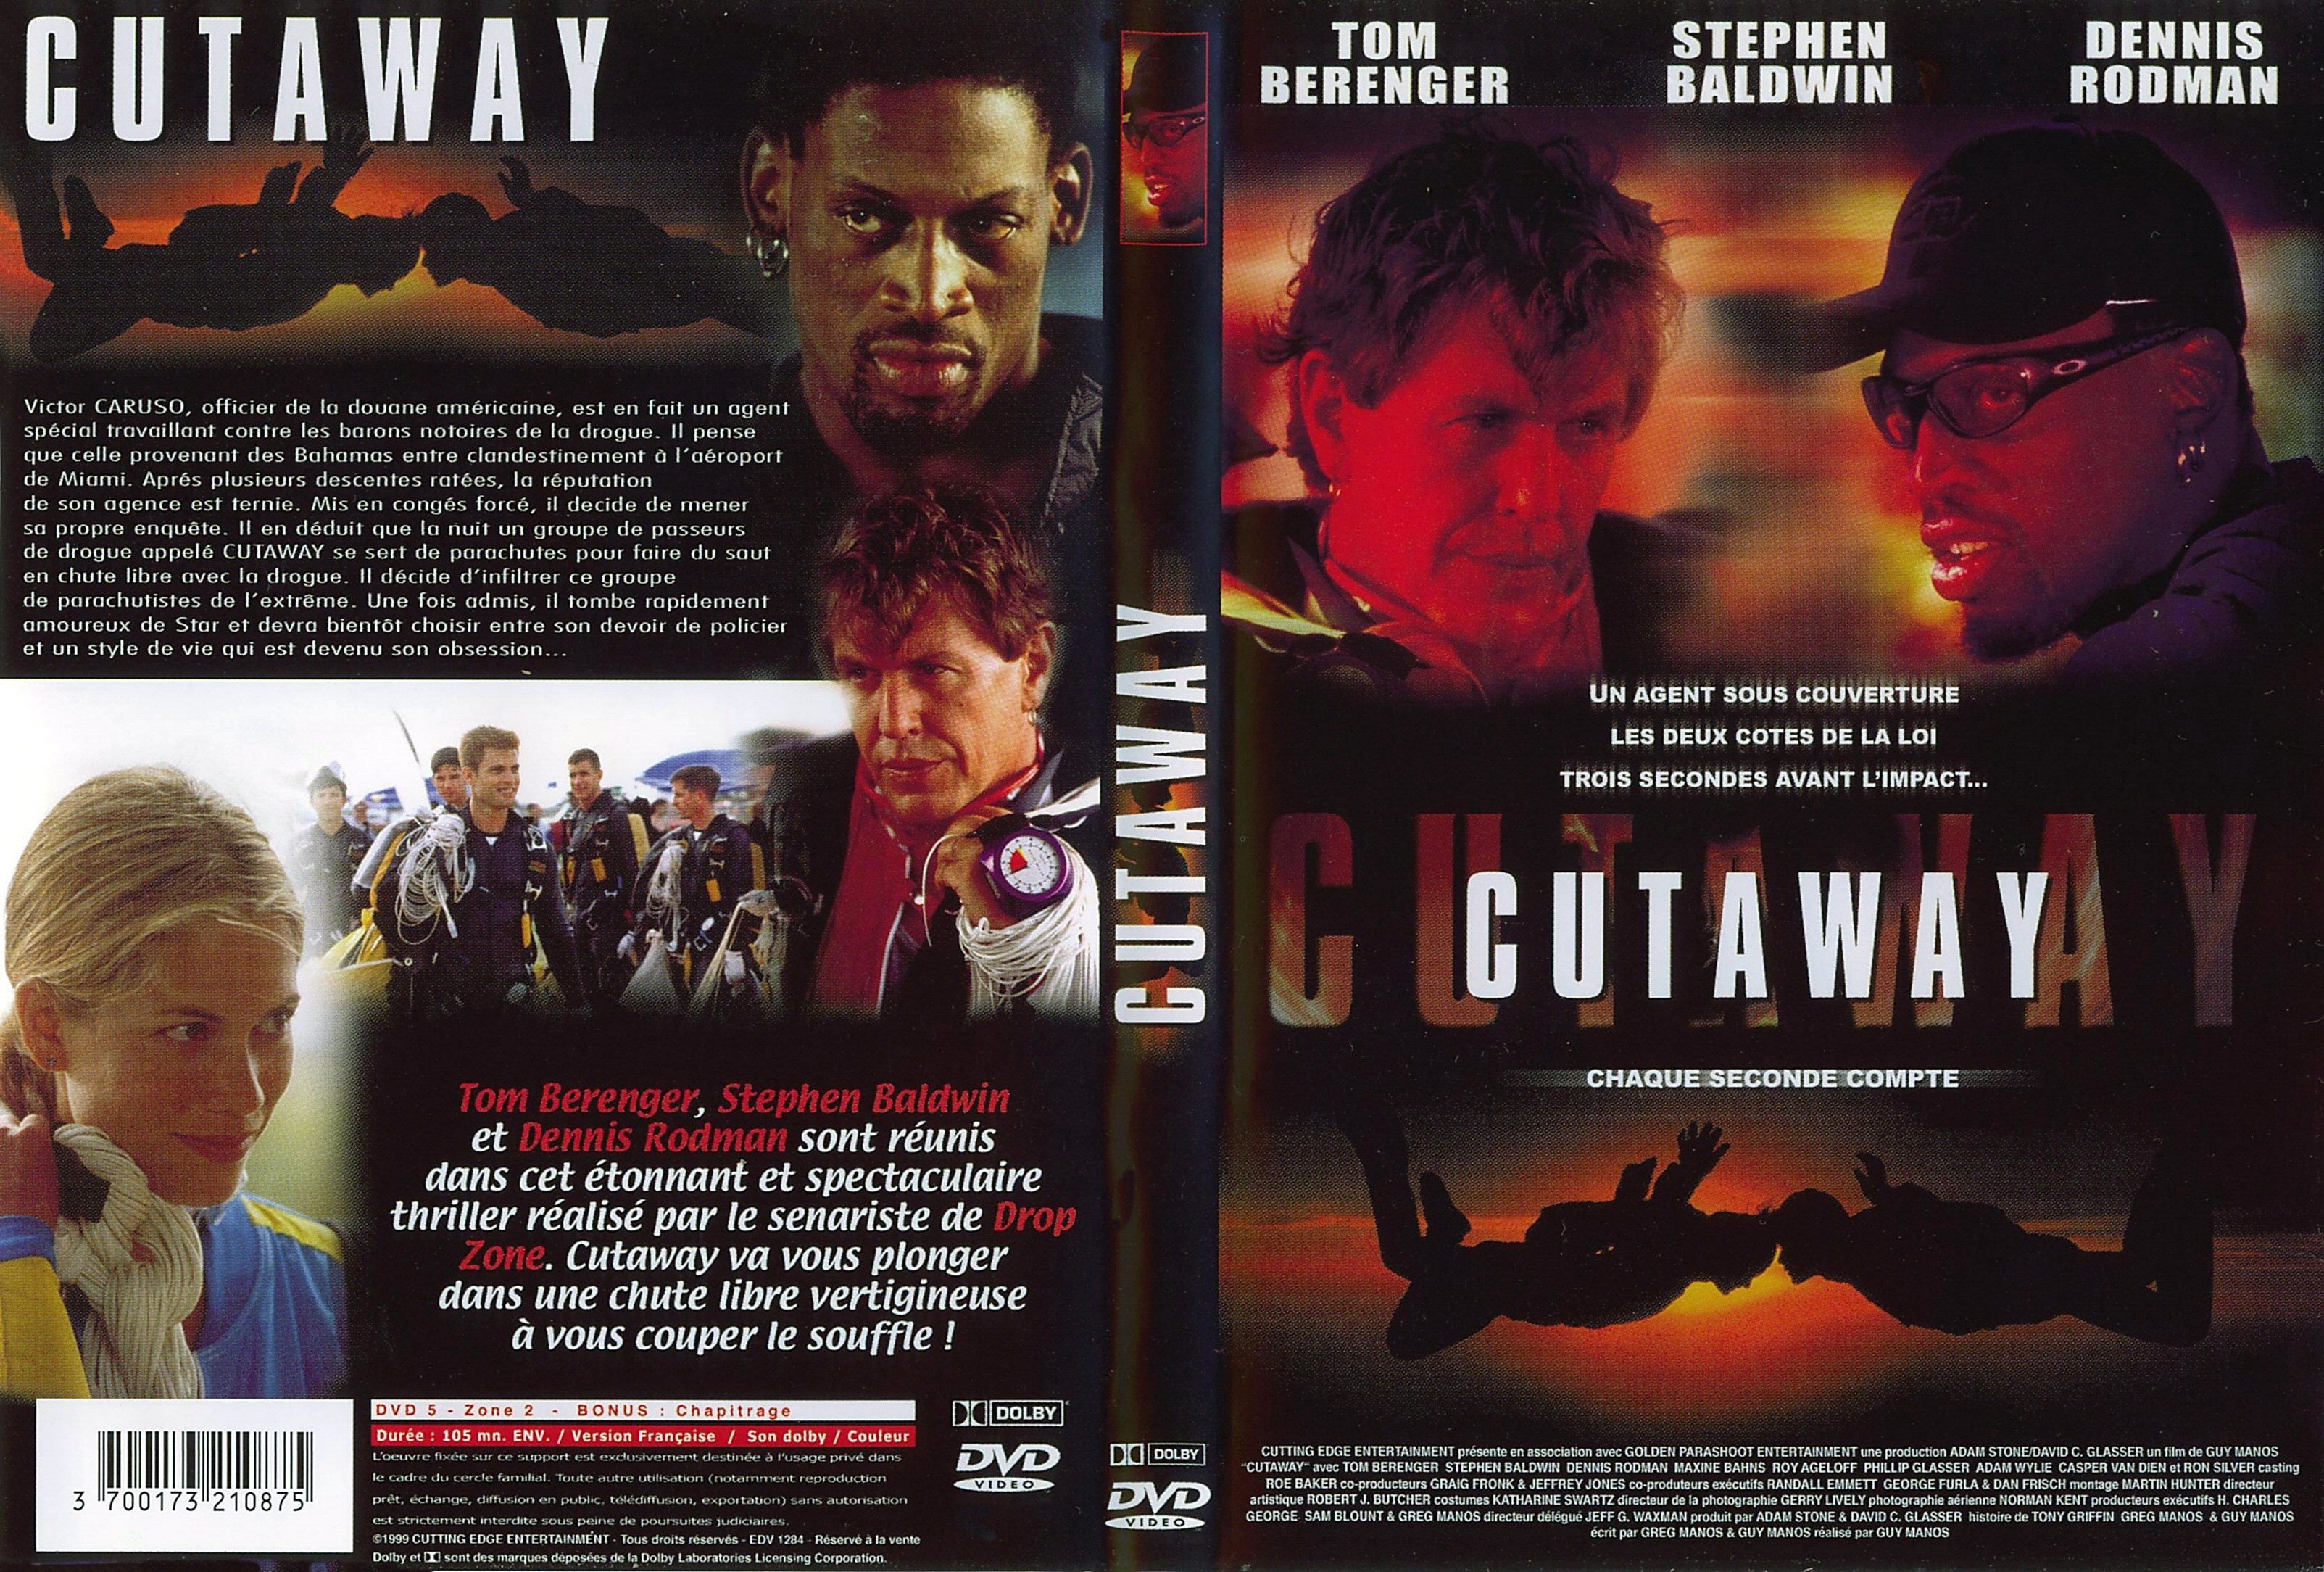 Jaquette DVD Cutaway